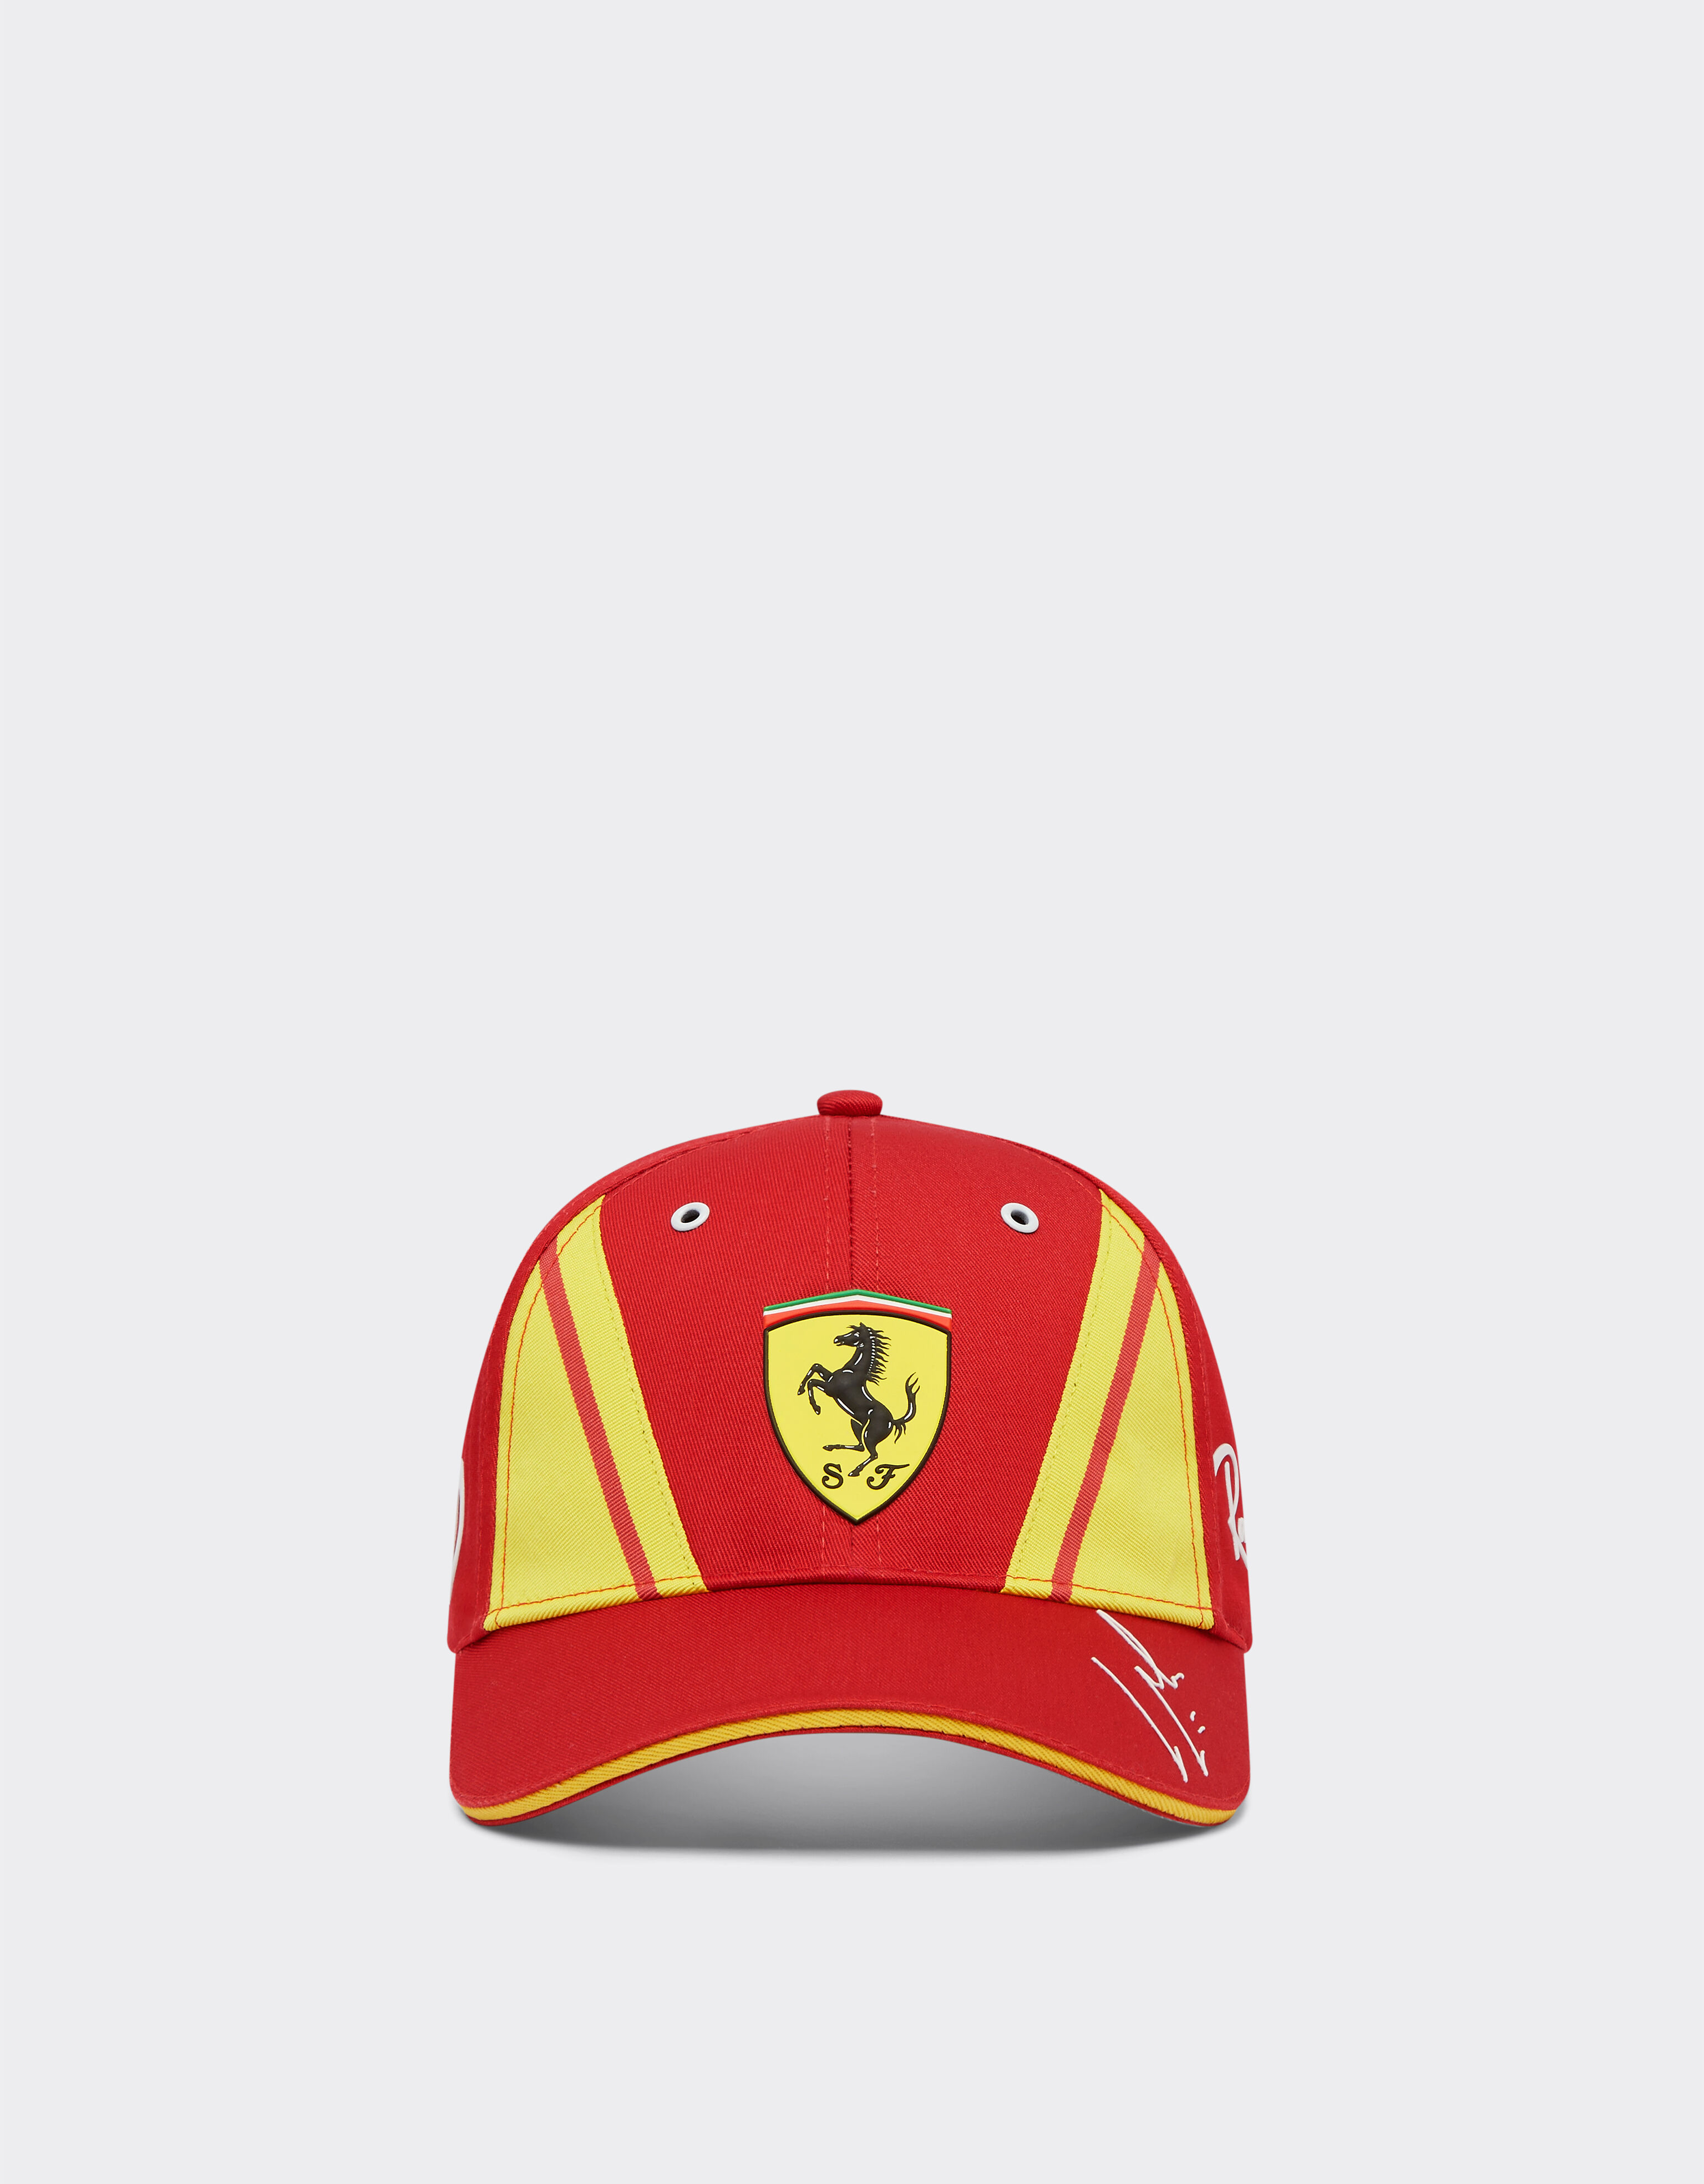 ${brand} Molina Ferrari Hypercar Baseballcap - Limited Edition ${colorDescription} ${masterID}